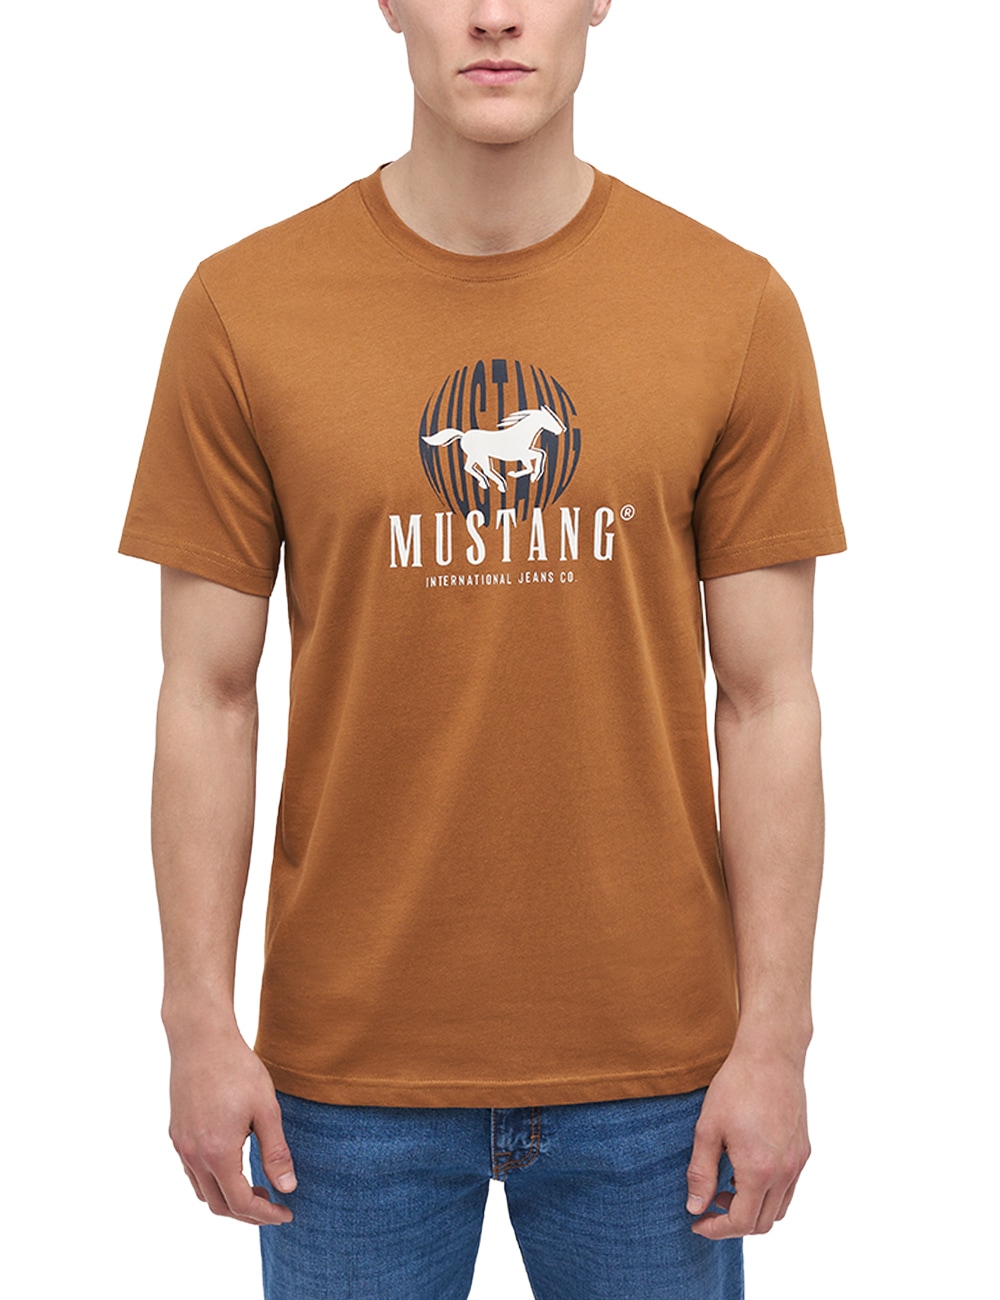 »Mustang T-Shirt MUSTANG ♕ Print-Shirt« bei Kurzarmshirt